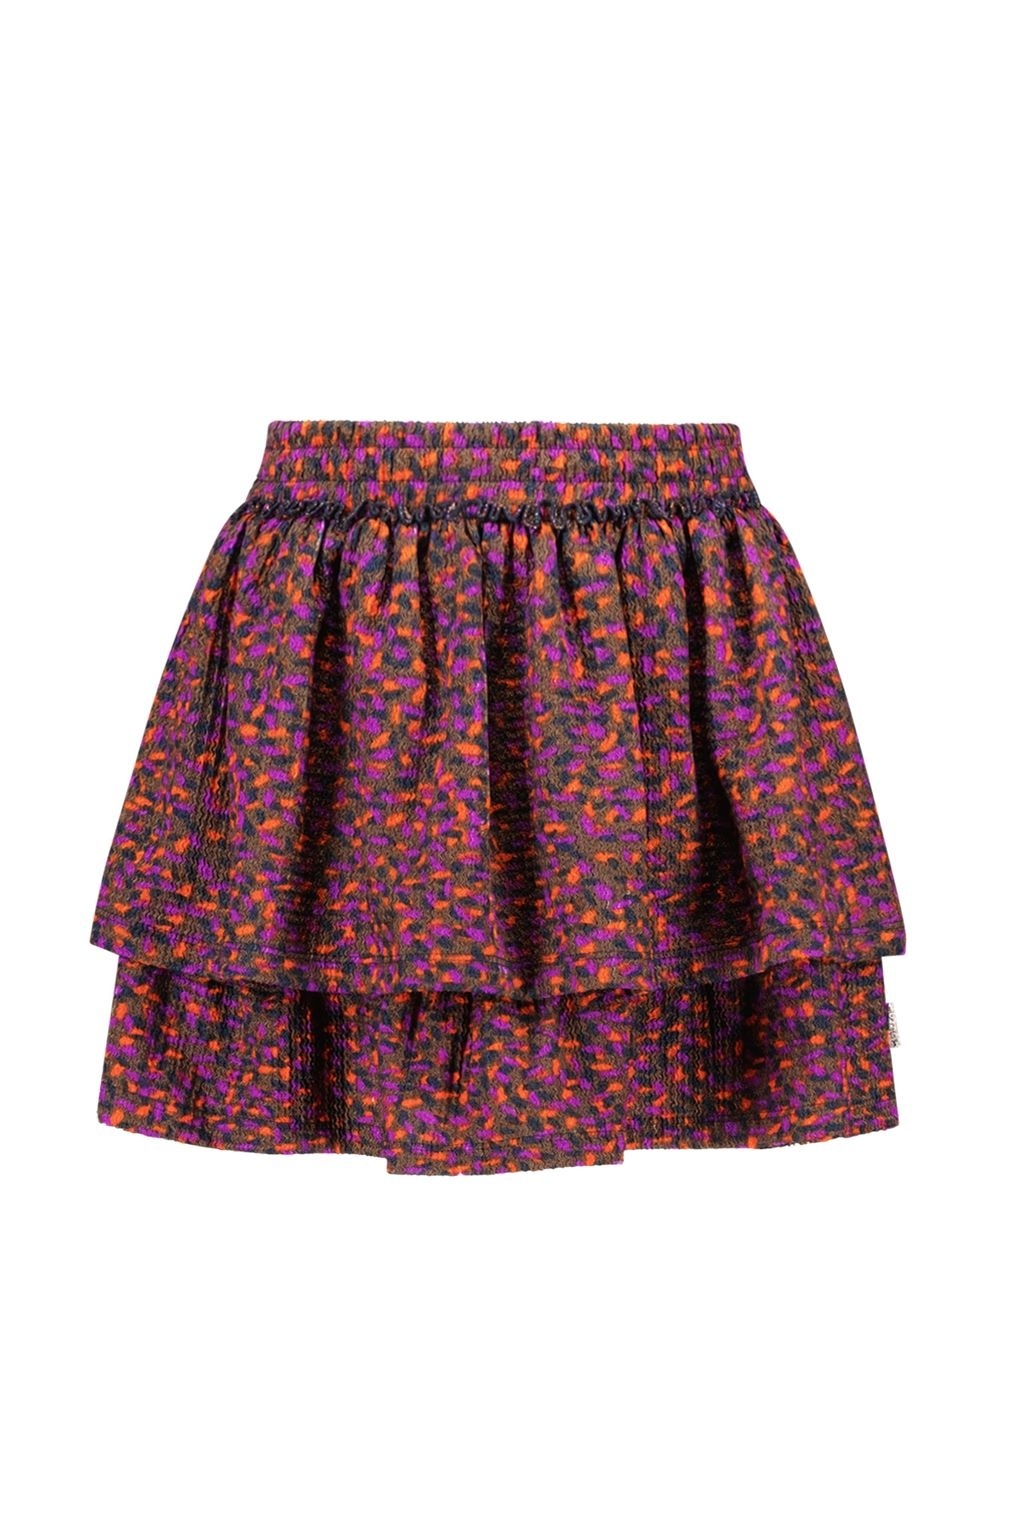 B.Nosy Girls Kids Skirts Y308-5720 maat 116